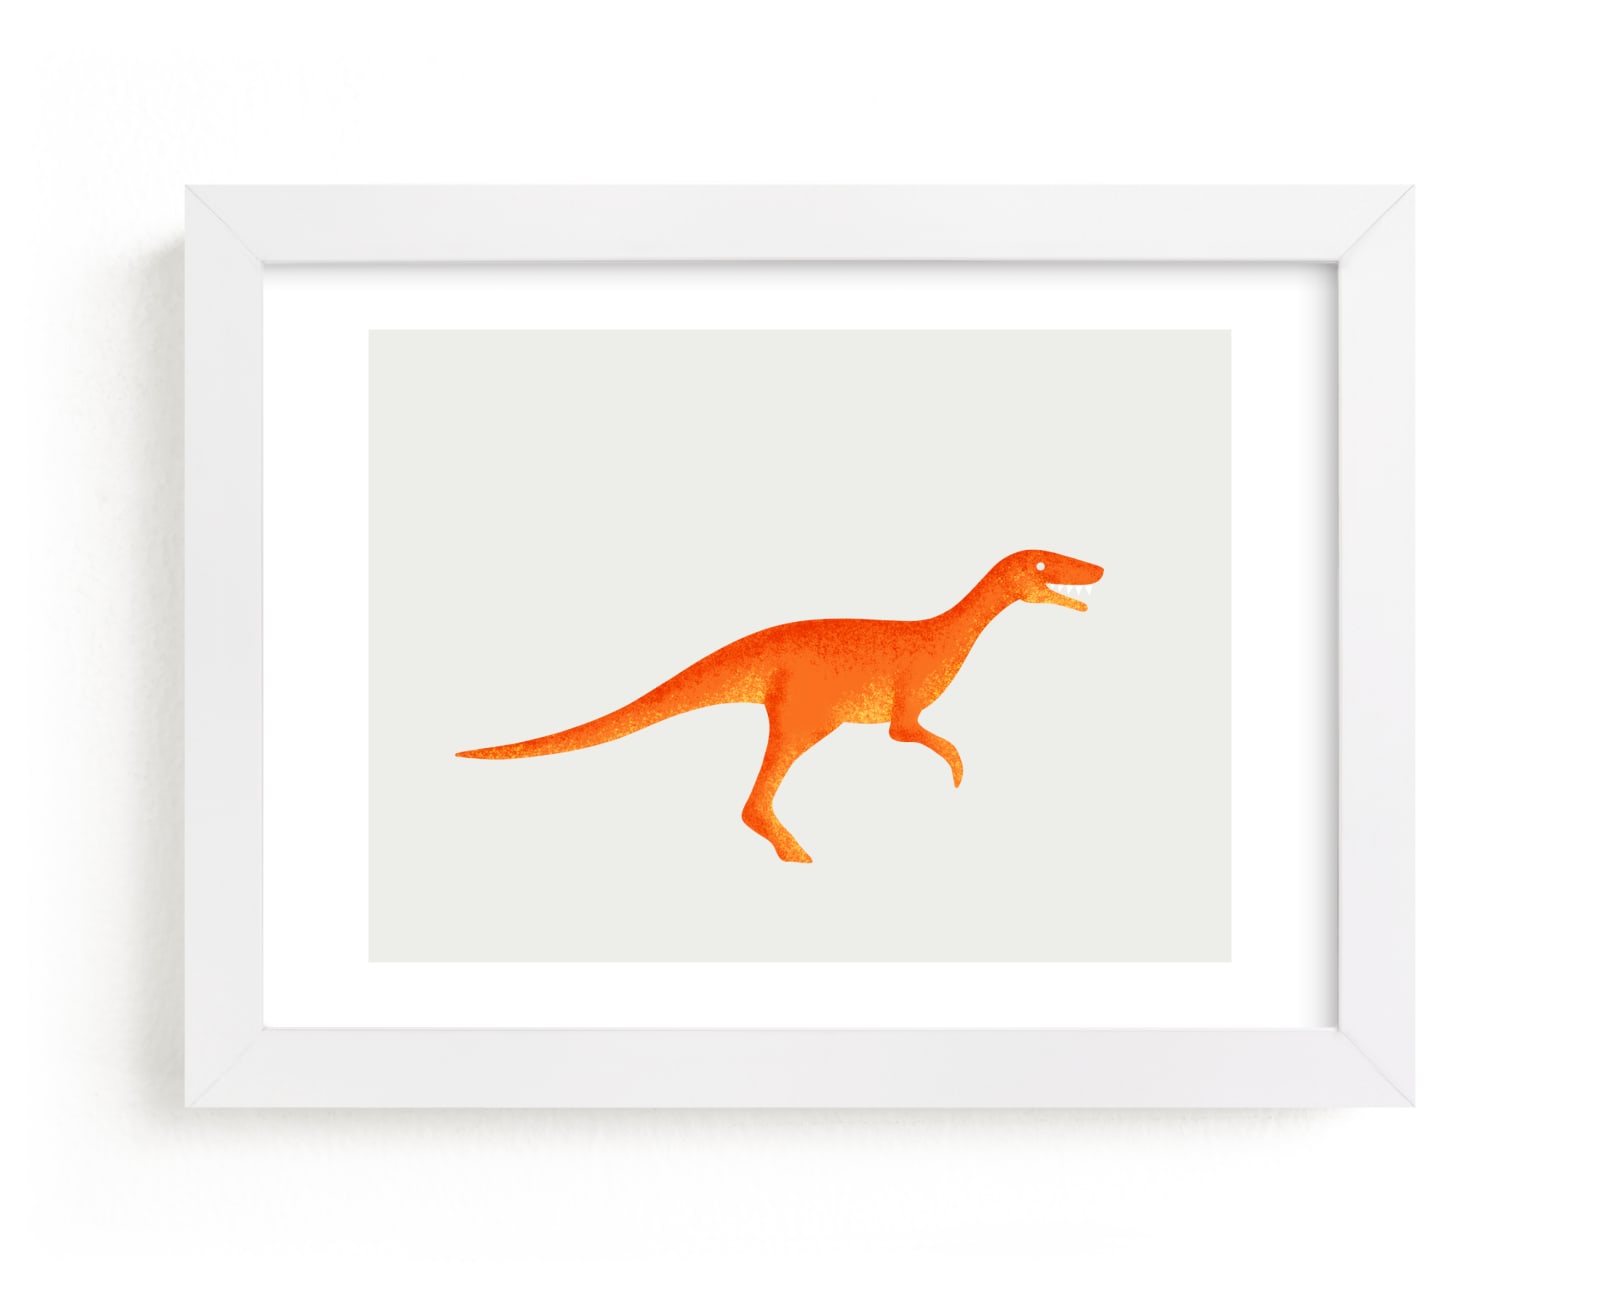 "Dinosaur Herrerasaurus" - Art Print by Ashley Presutti Beasley in beautiful frame options and a variety of sizes.